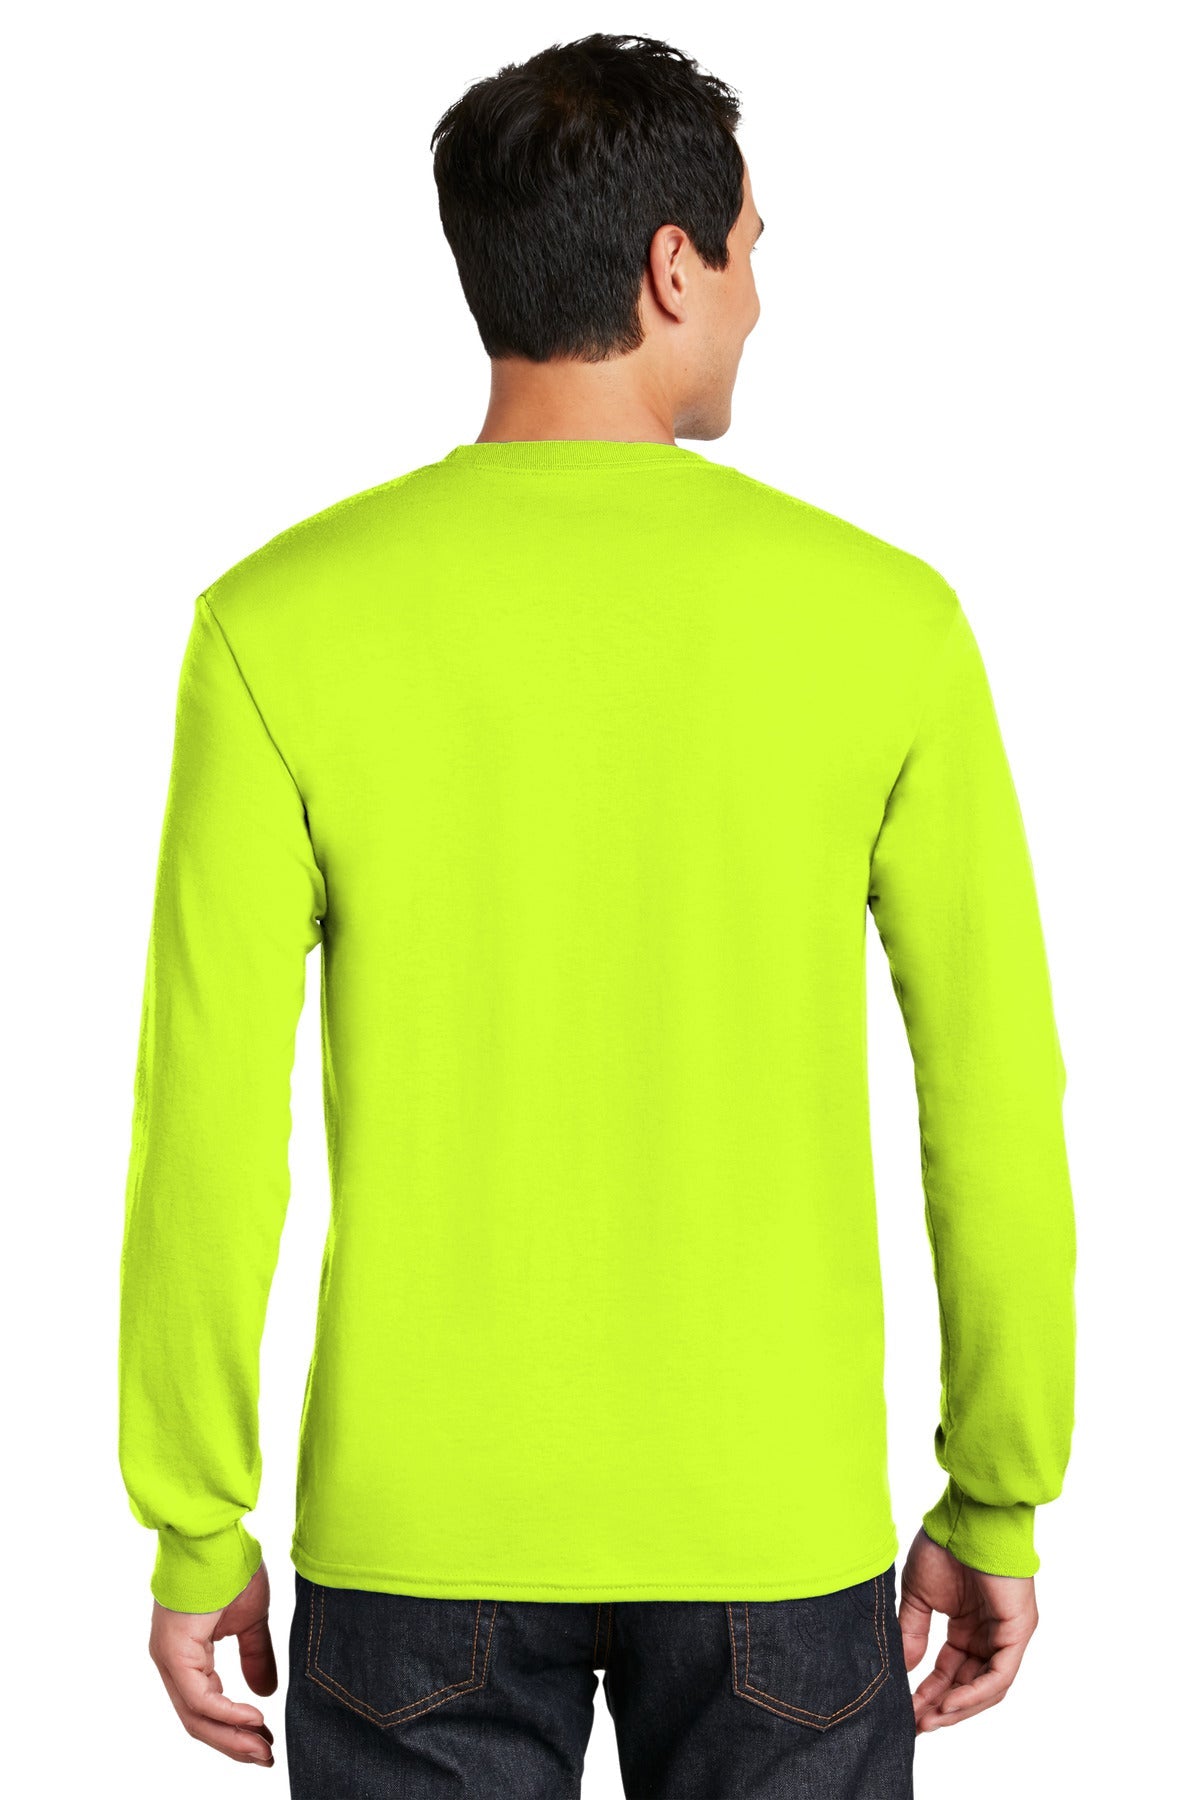 Gildan® - DryBlend® 50 Cotton/50 Poly Long Sleeve T-Shirt. 8400 [Safety Green] - DFW Impression